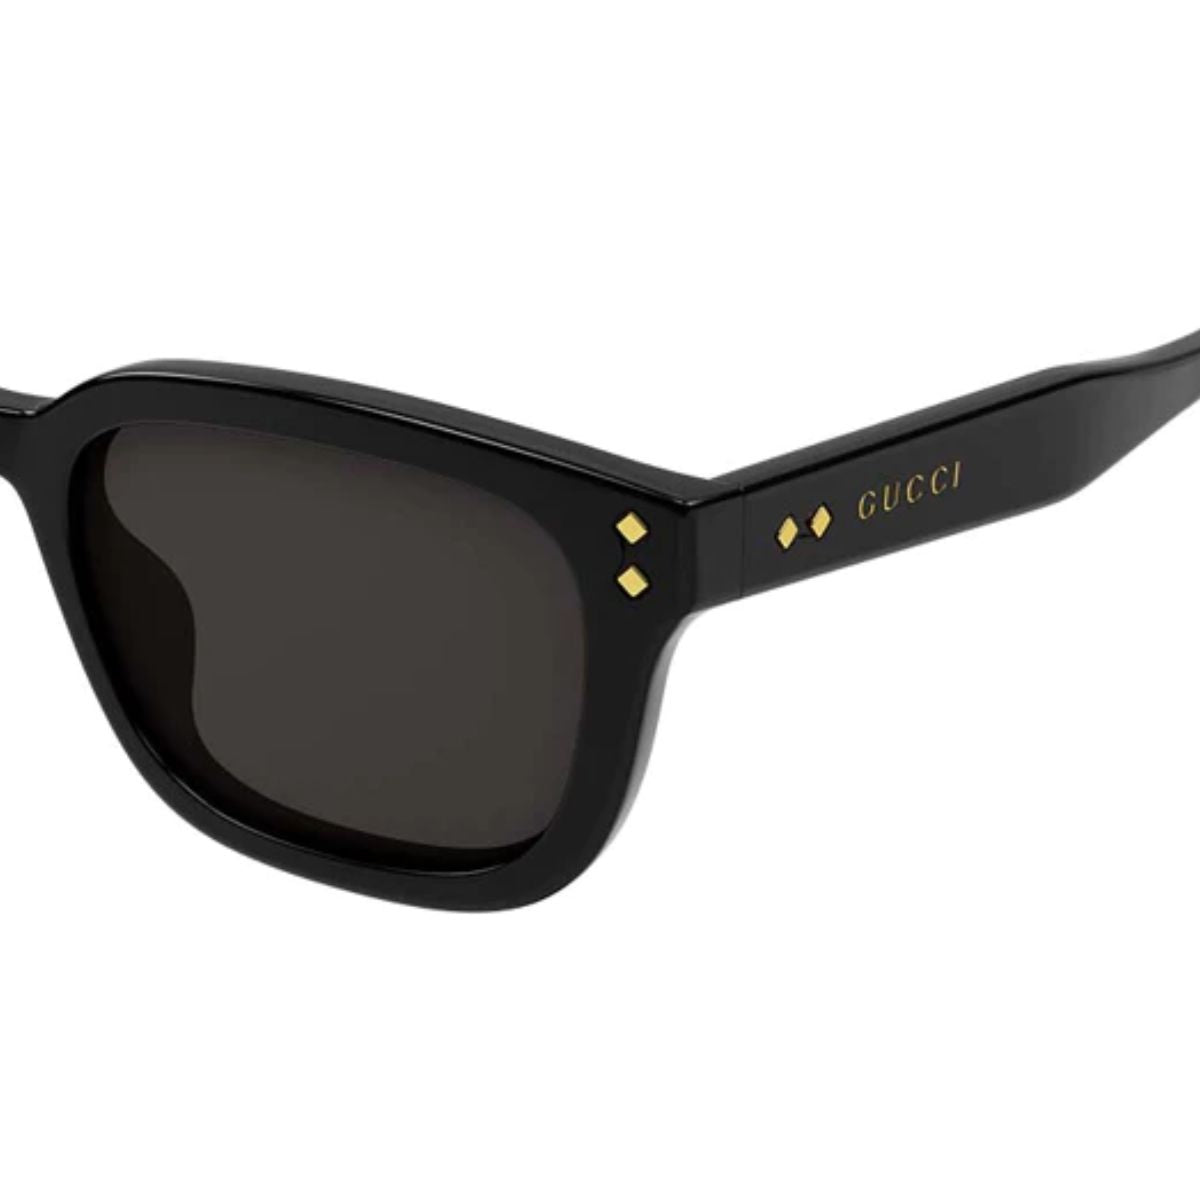 "Fashionable Gucci Square Sunglasses For Womens At Optorium"